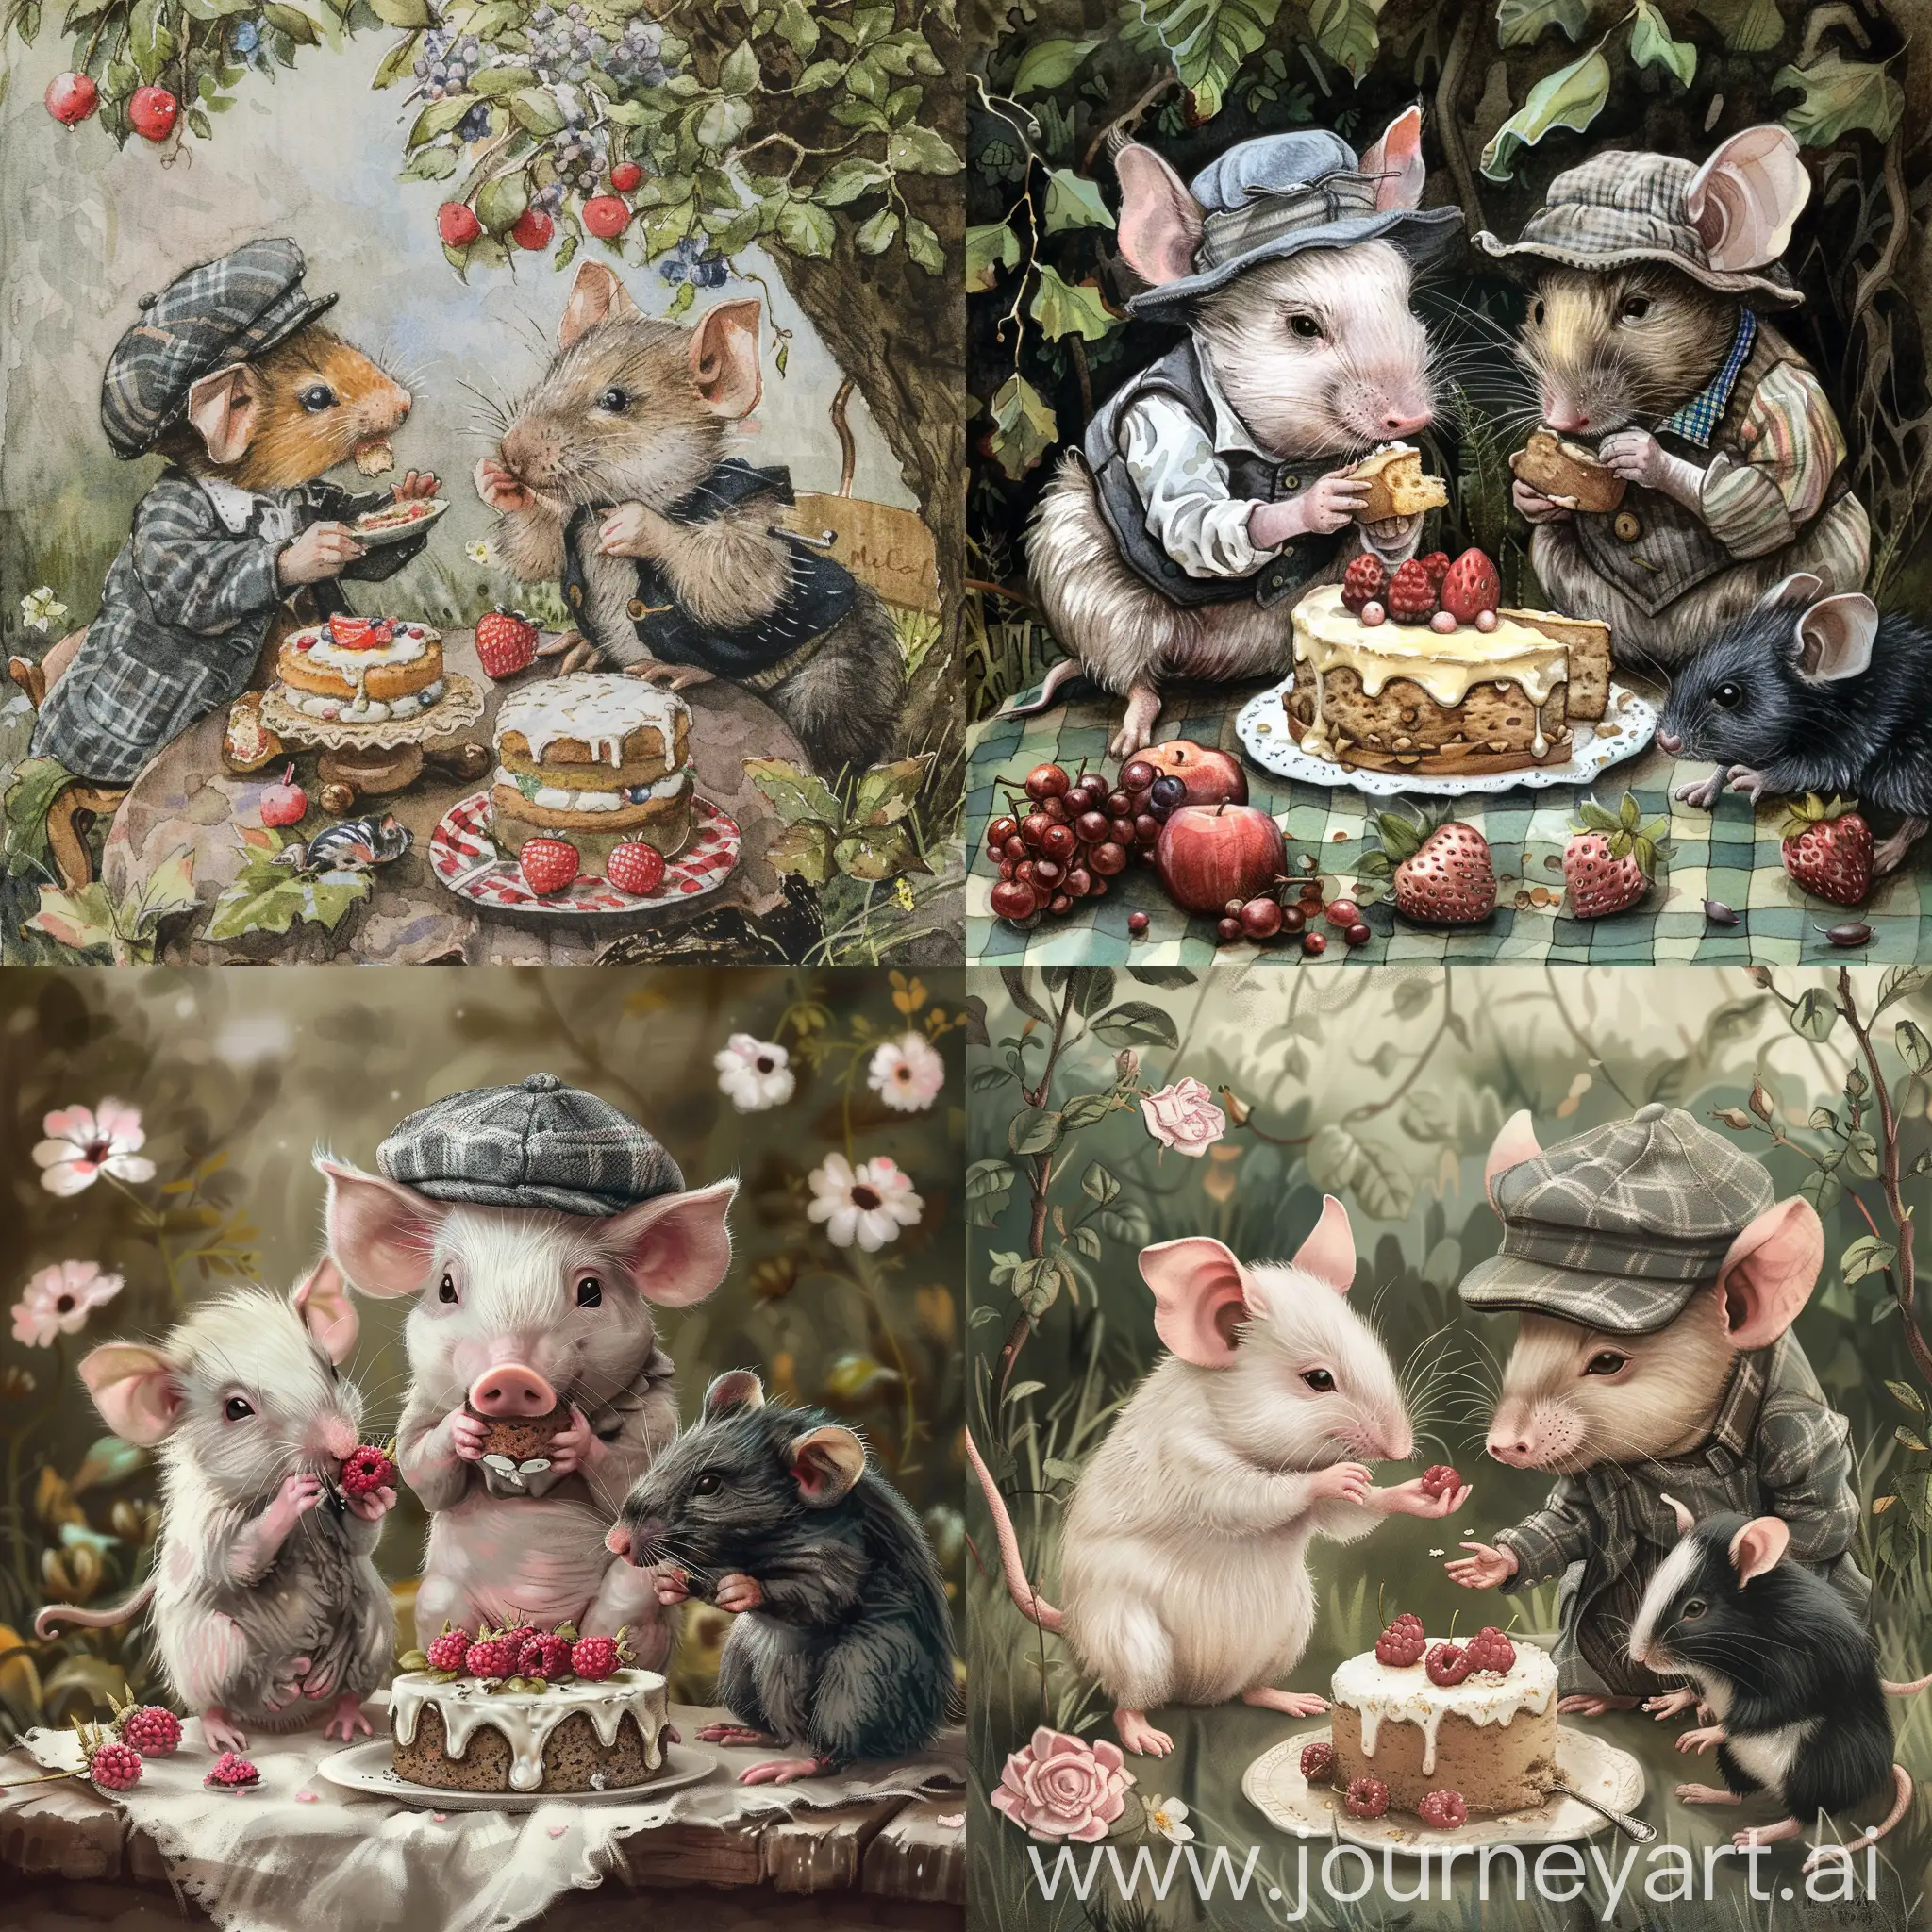 Adorable-Animals-Enjoying-Cake-in-Idyllic-Beatrix-Potter-Style-Garden